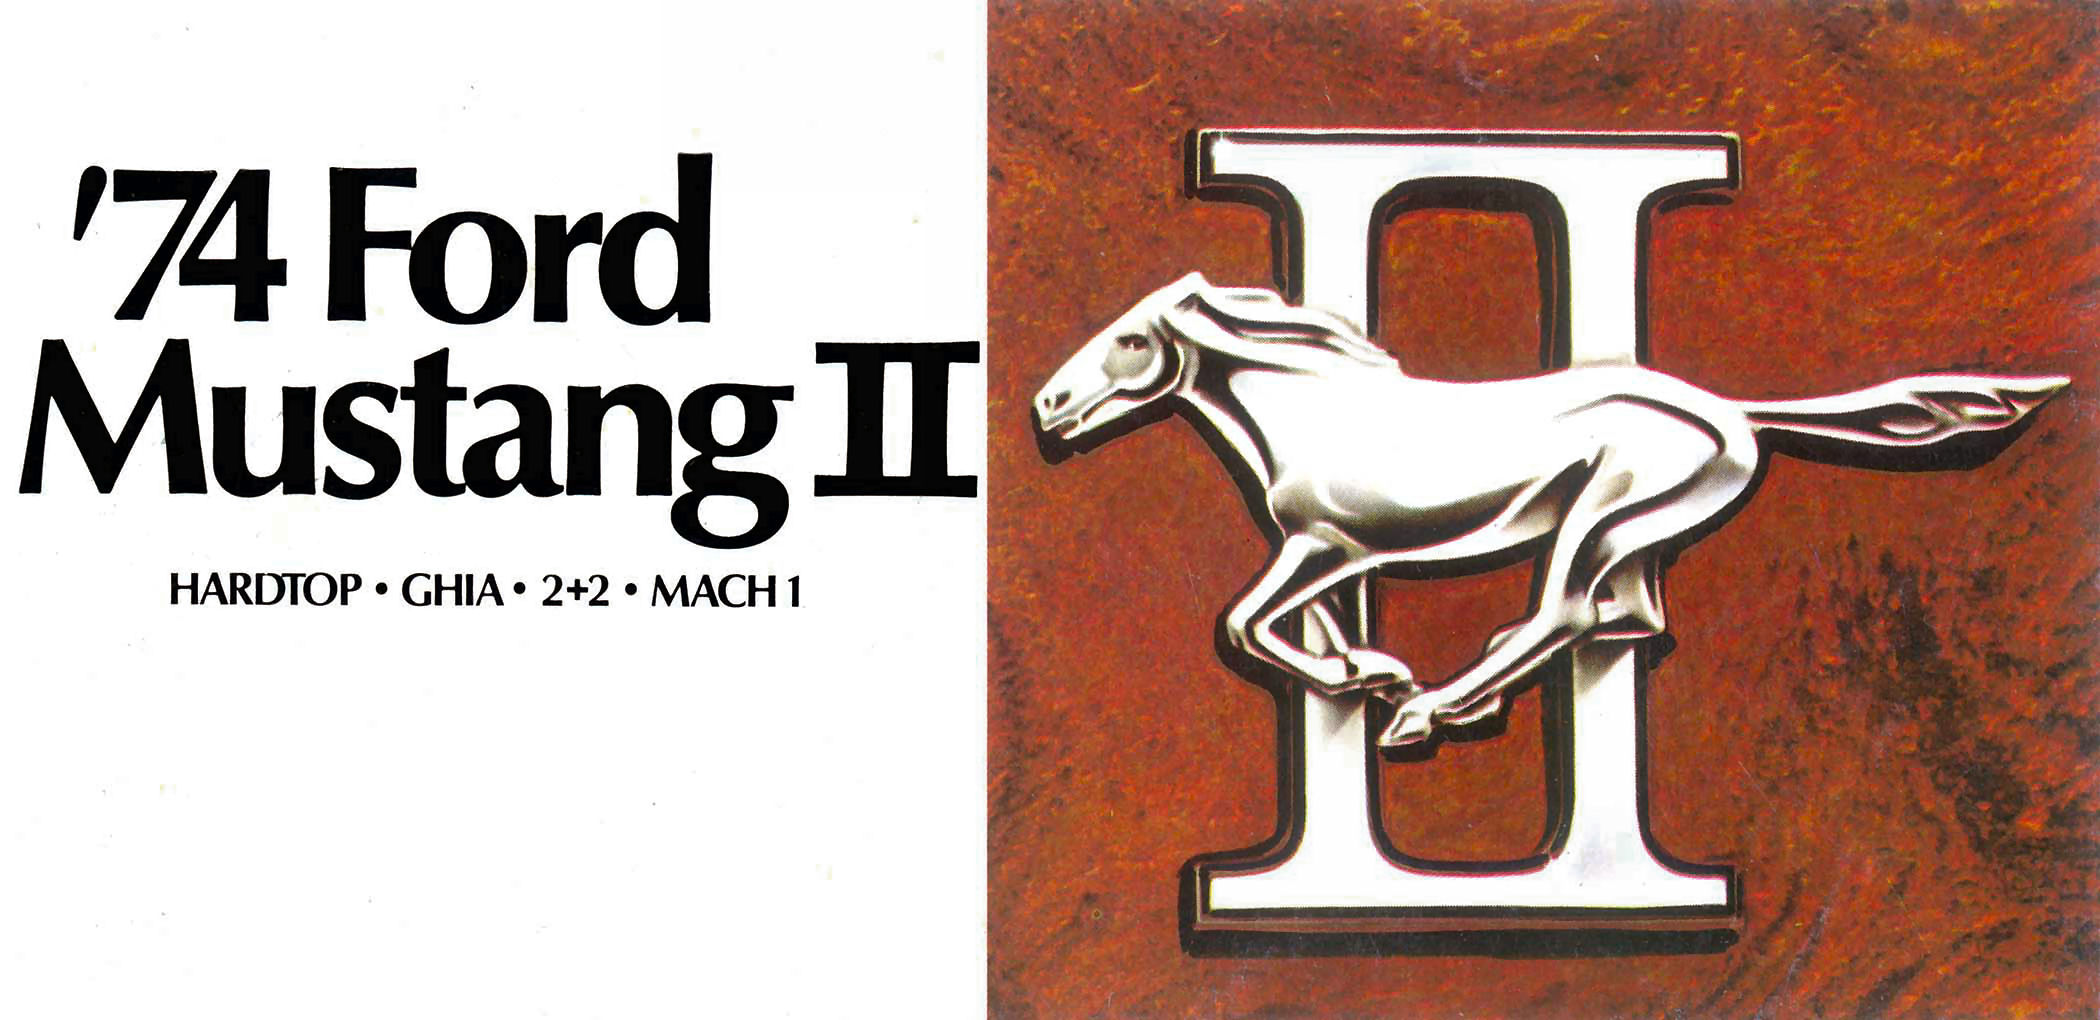 1974_Mustang_II_Folder-01